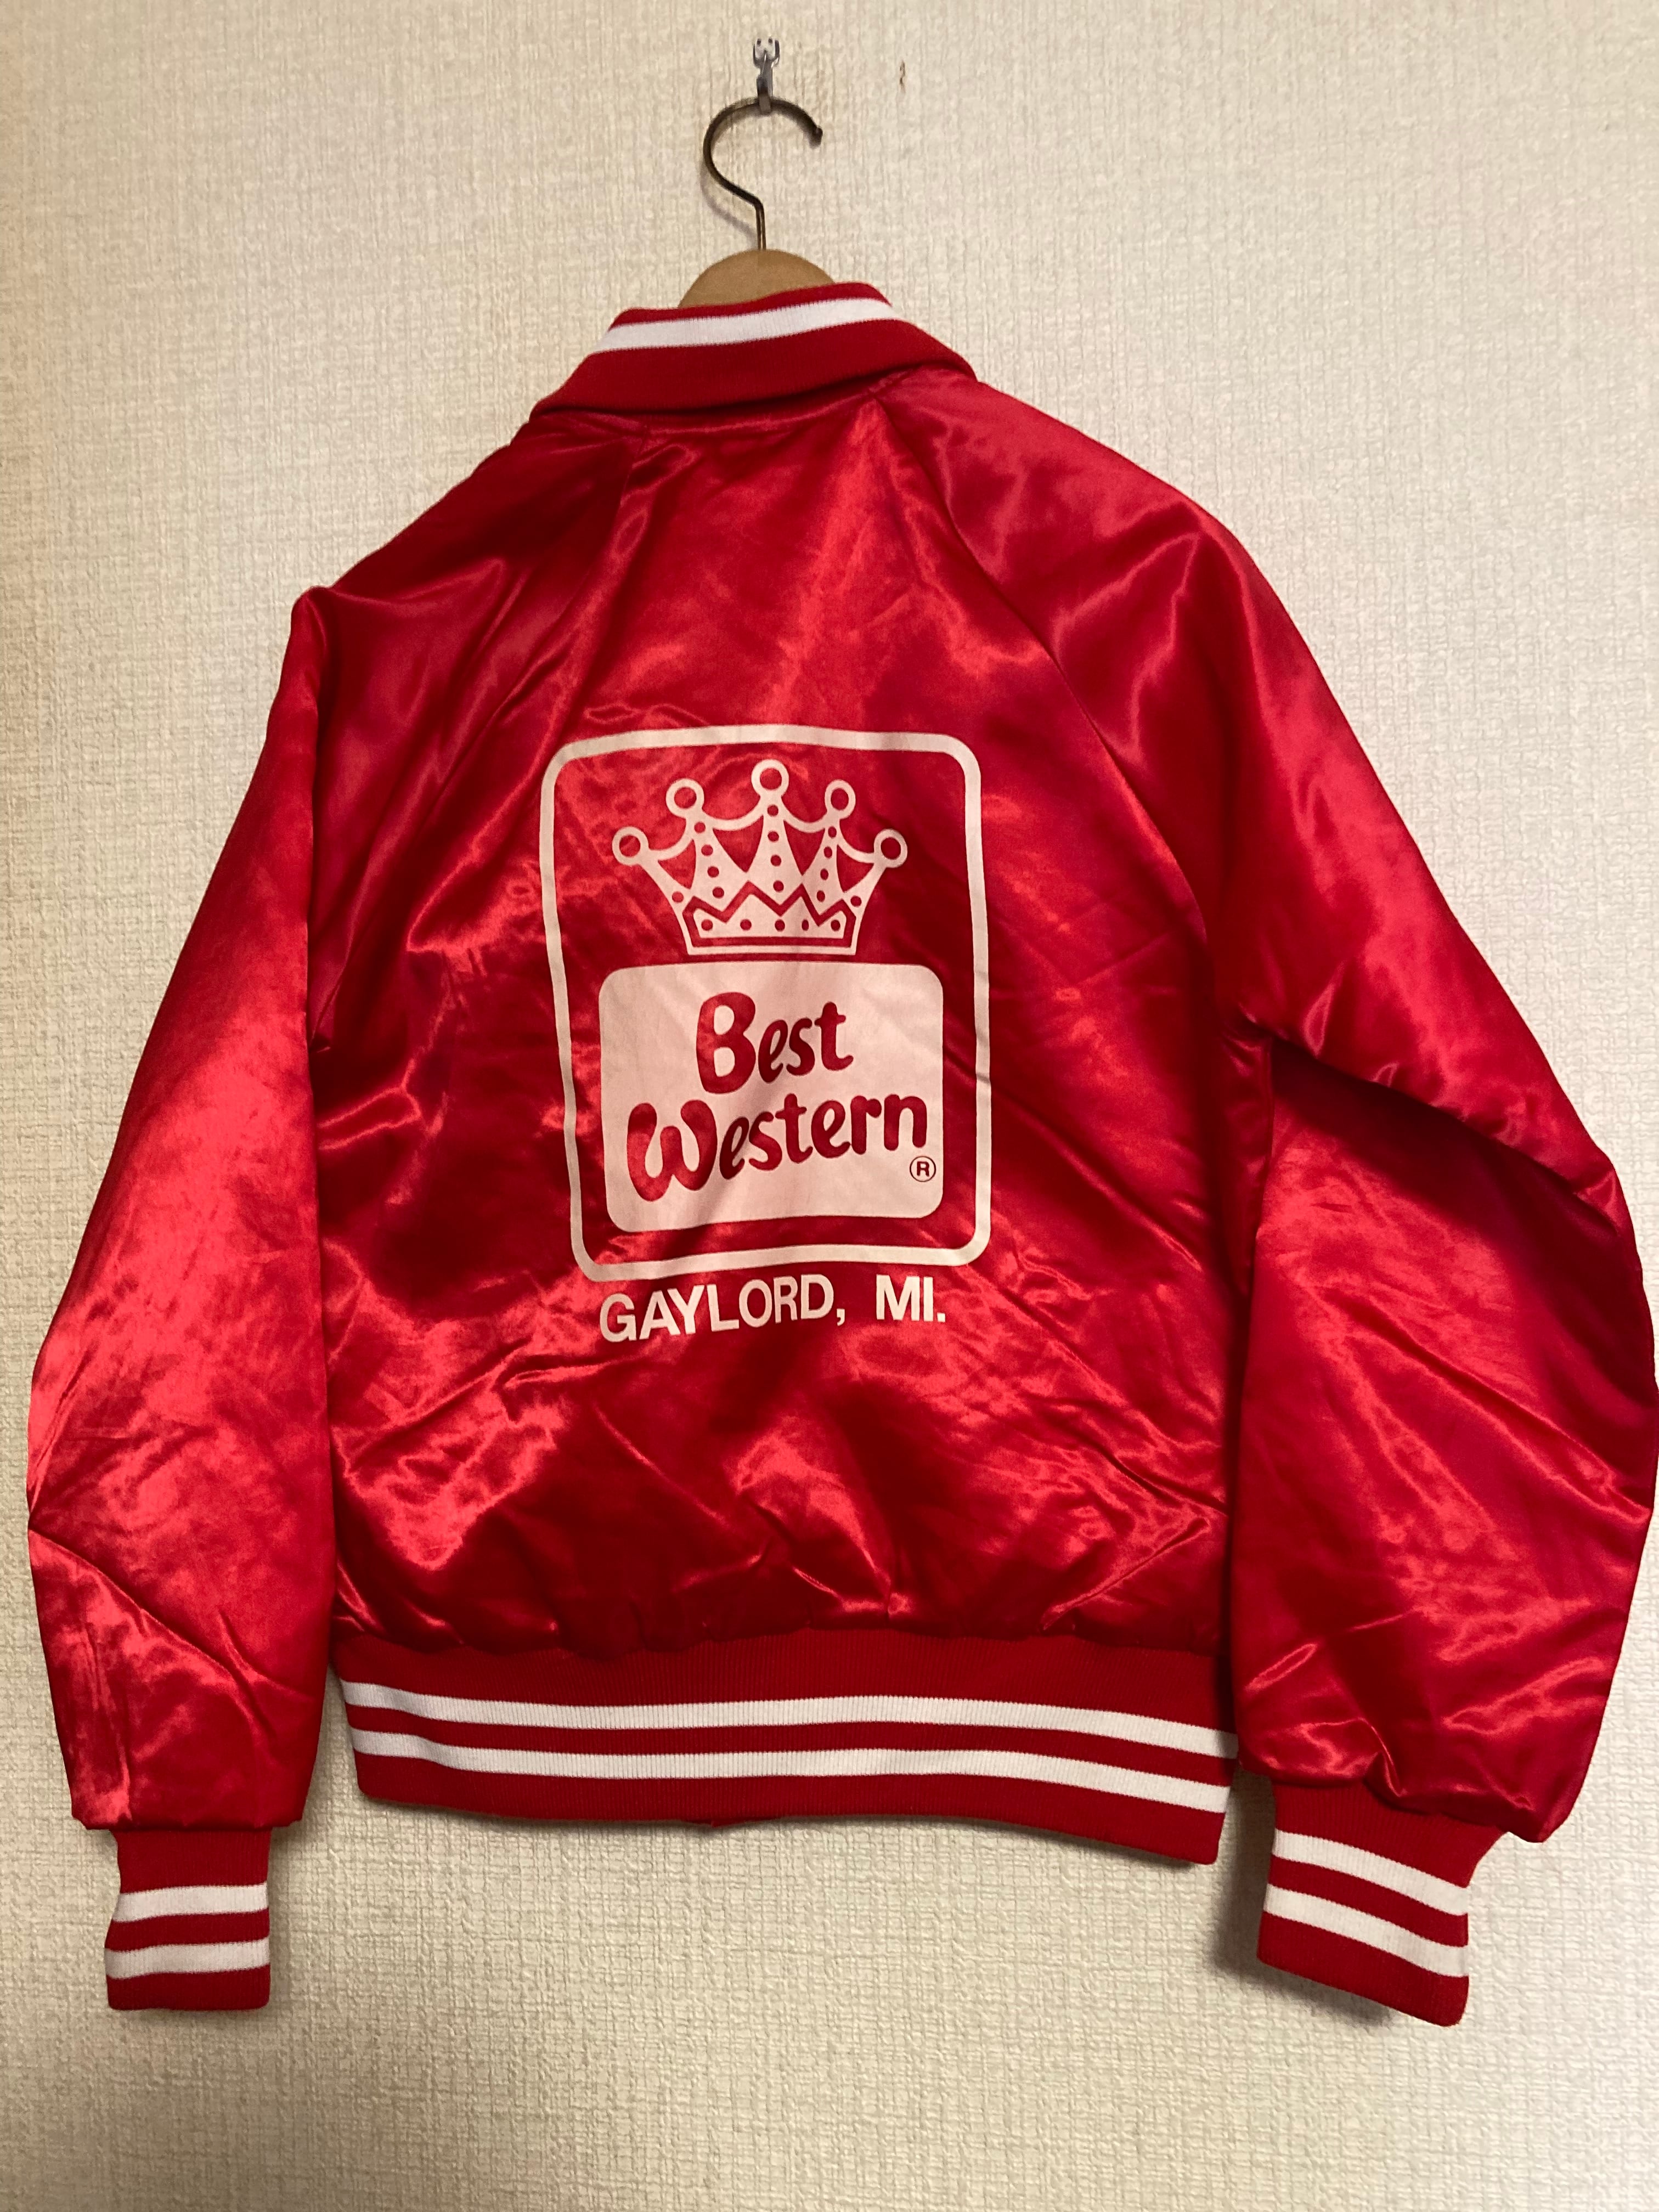 staff nylon jacket 90s 企業モノ